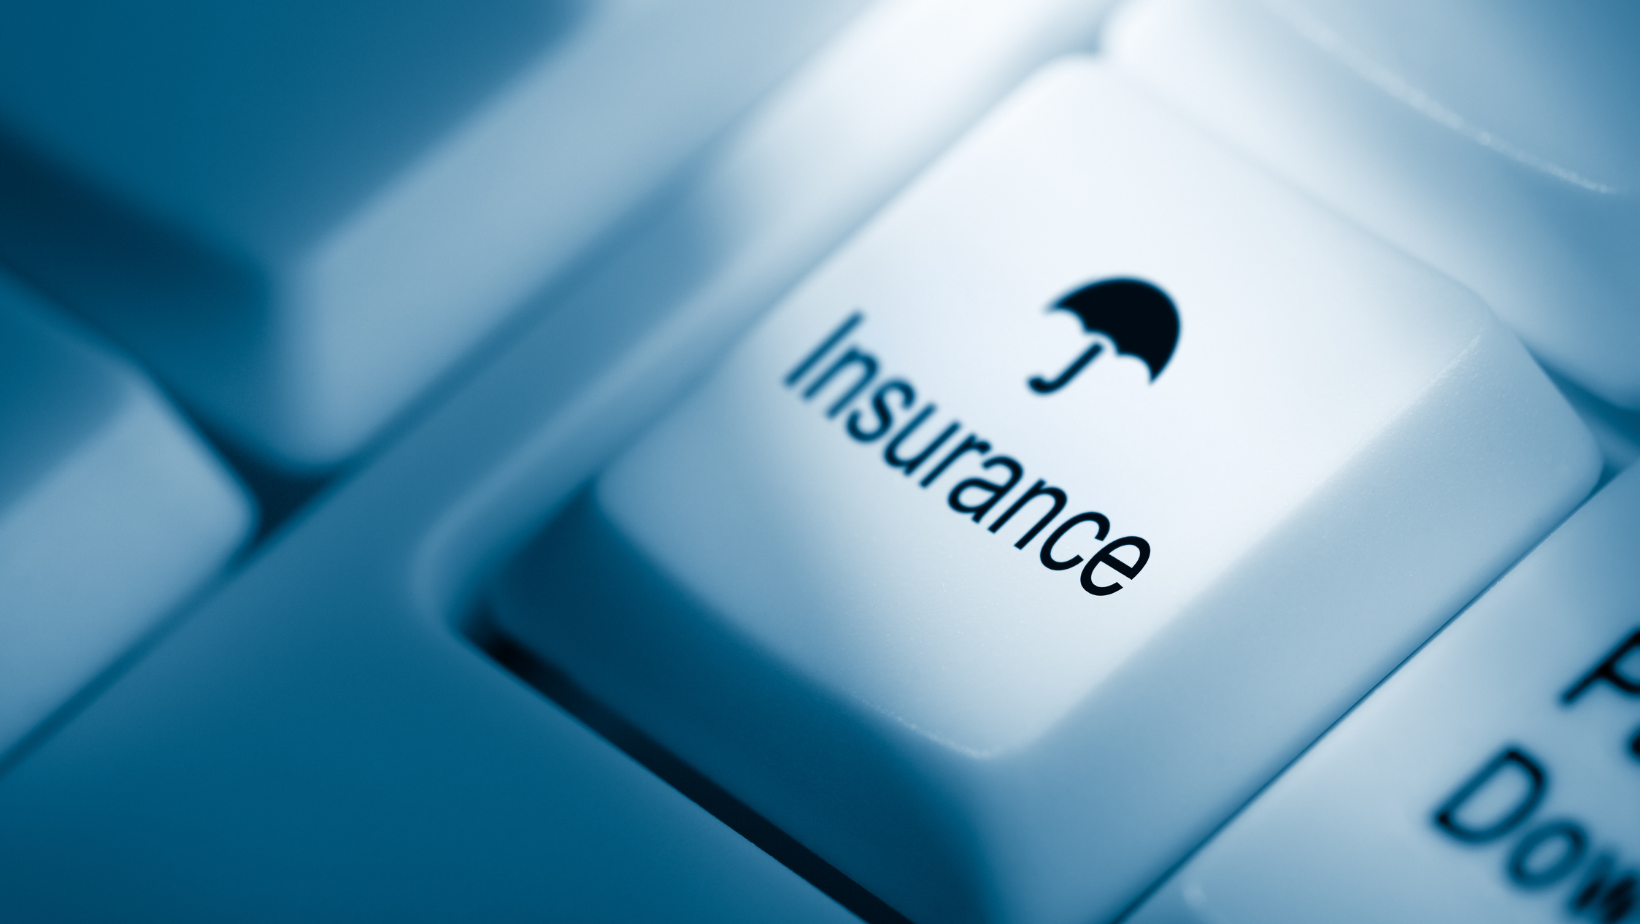 Factors you should consider when choosing restaurant insurance